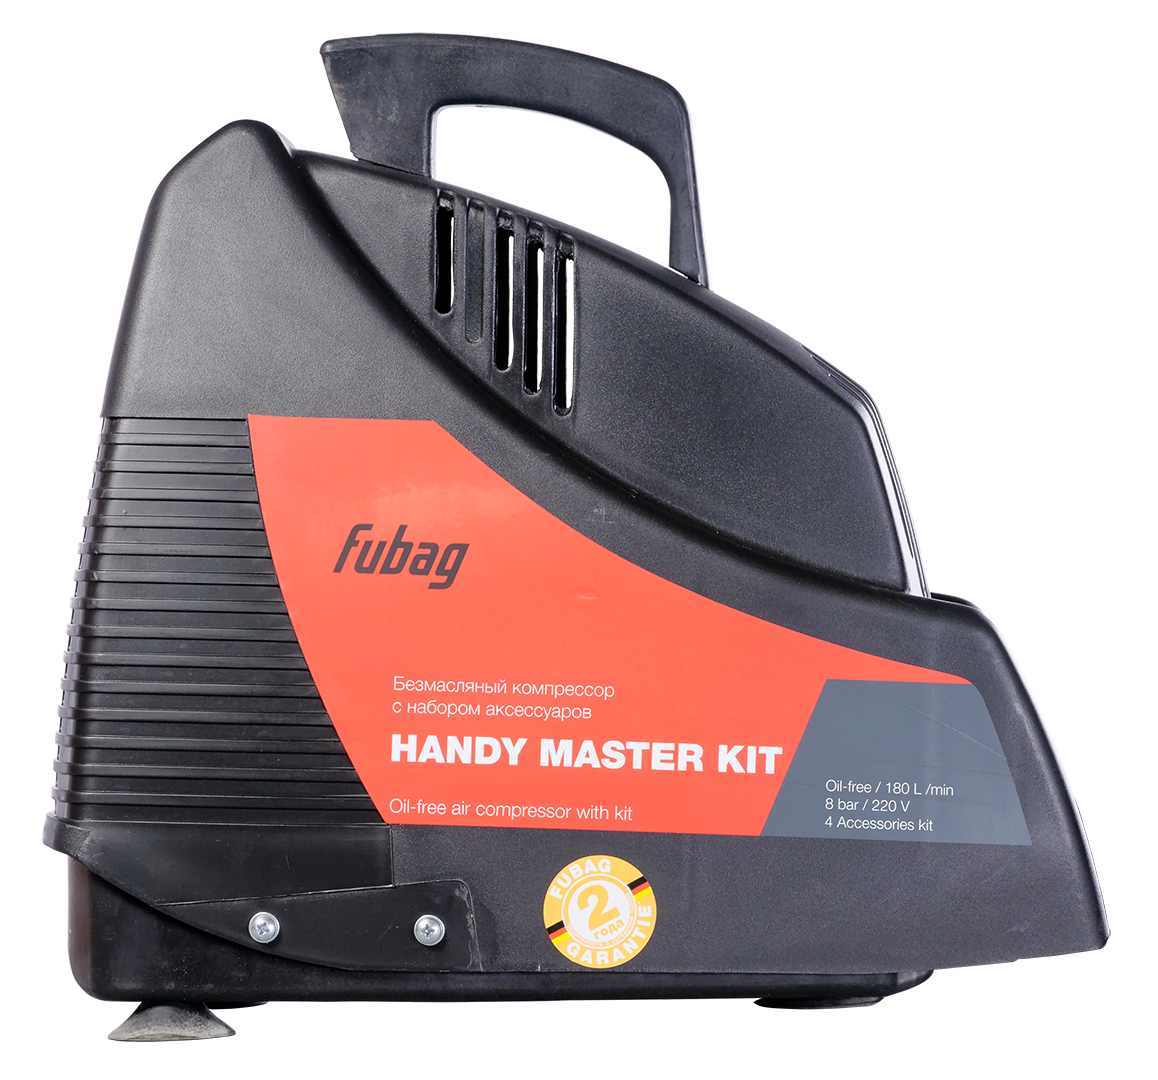 Компрессор master kit. Компрессор Fubag Handy Air ol 195. Компрессор Fubag Handy Master Kit + 5. Компрессор Handy Master Kit + 5 (ol 195+5 предметов). Fubag Handy Master Kit 195.